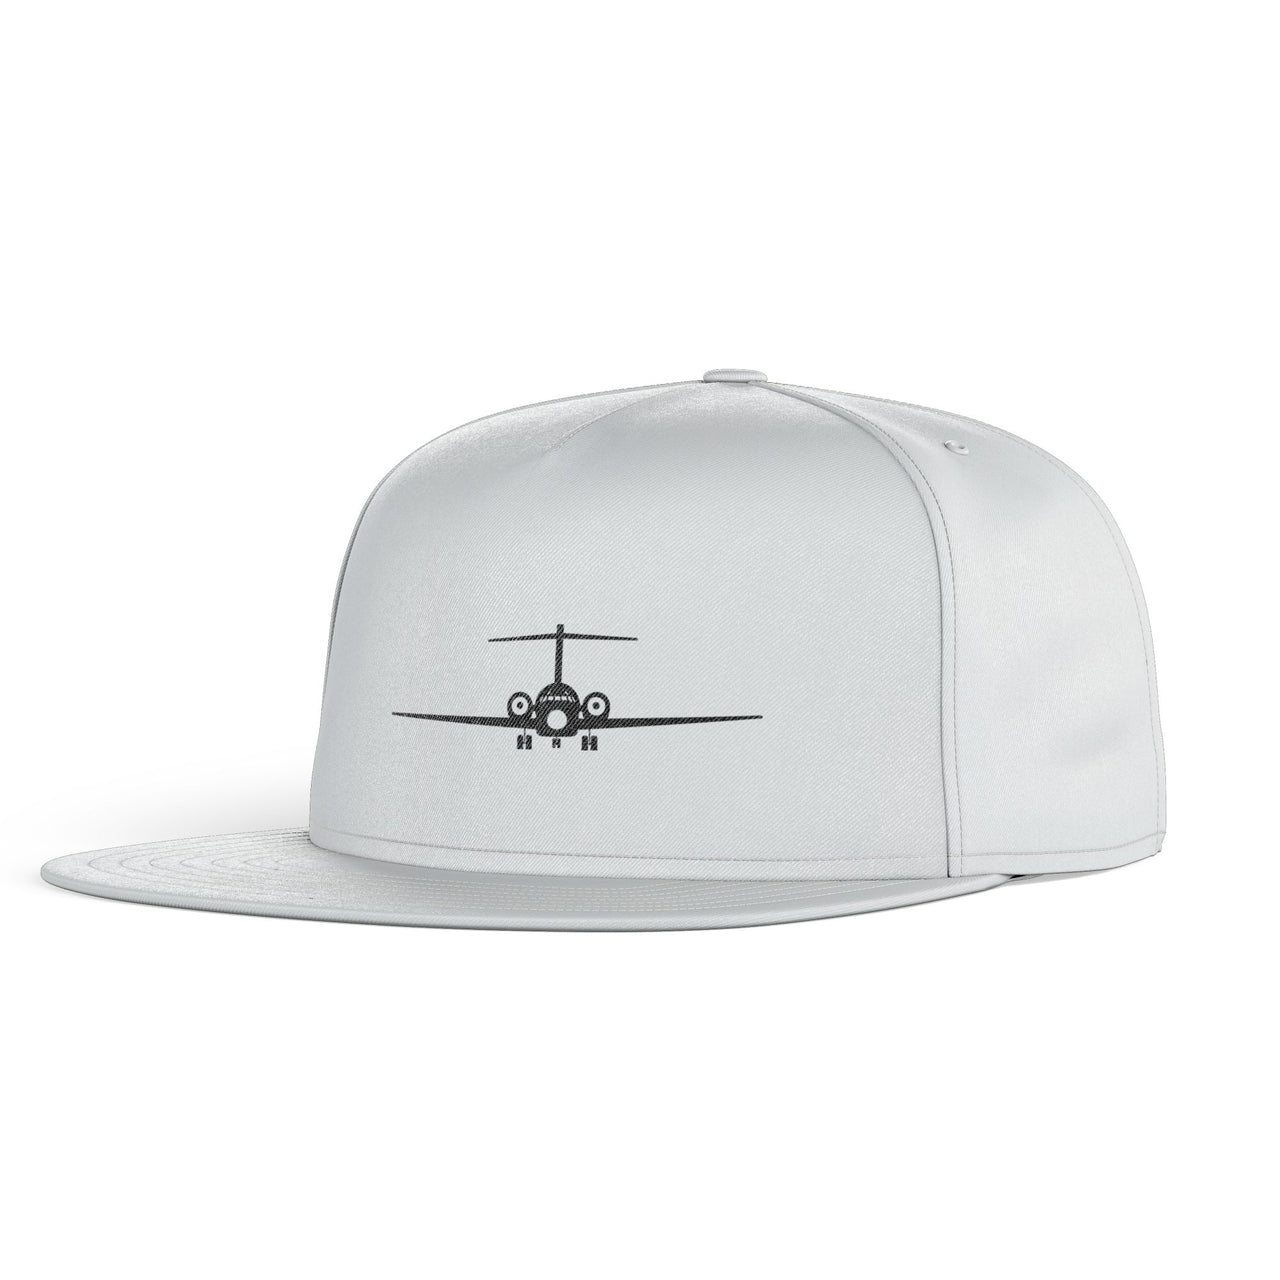 Boeing 717 Silhouette Designed Snapback Caps & Hats